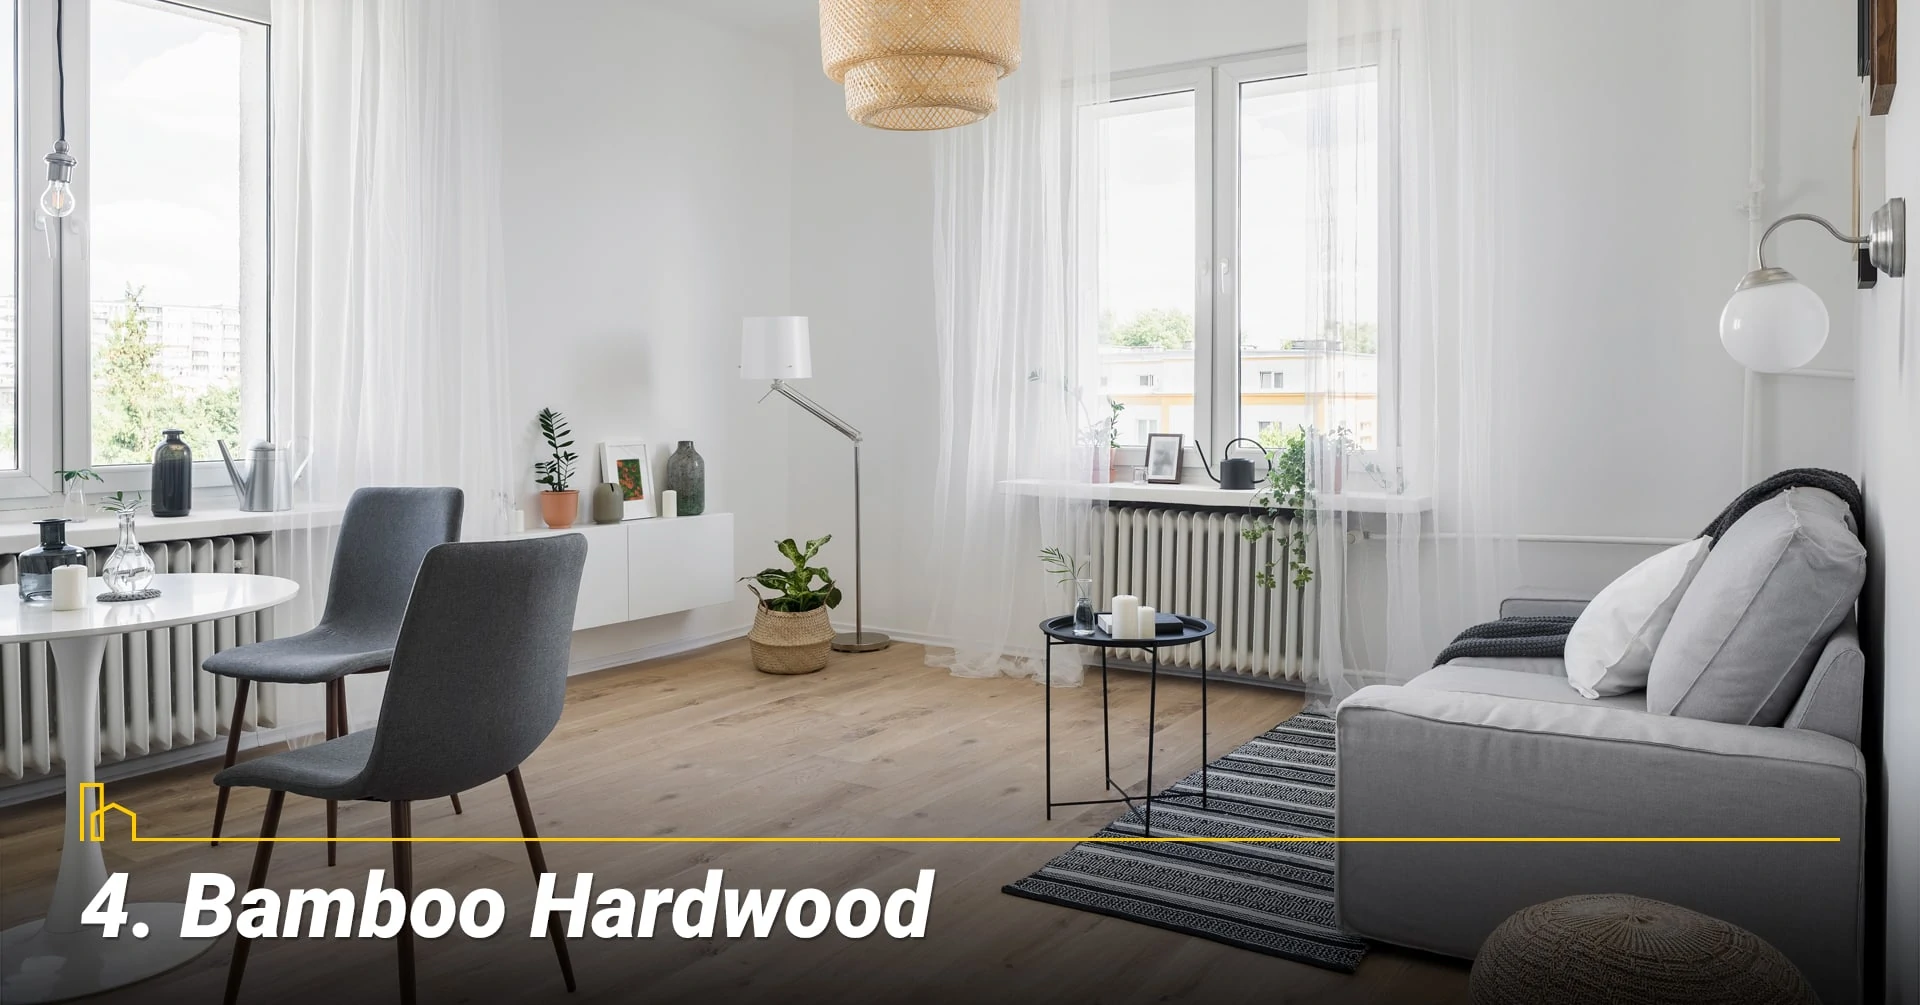 Bamboo Hardwood, cover your floor with bamboo hardwood